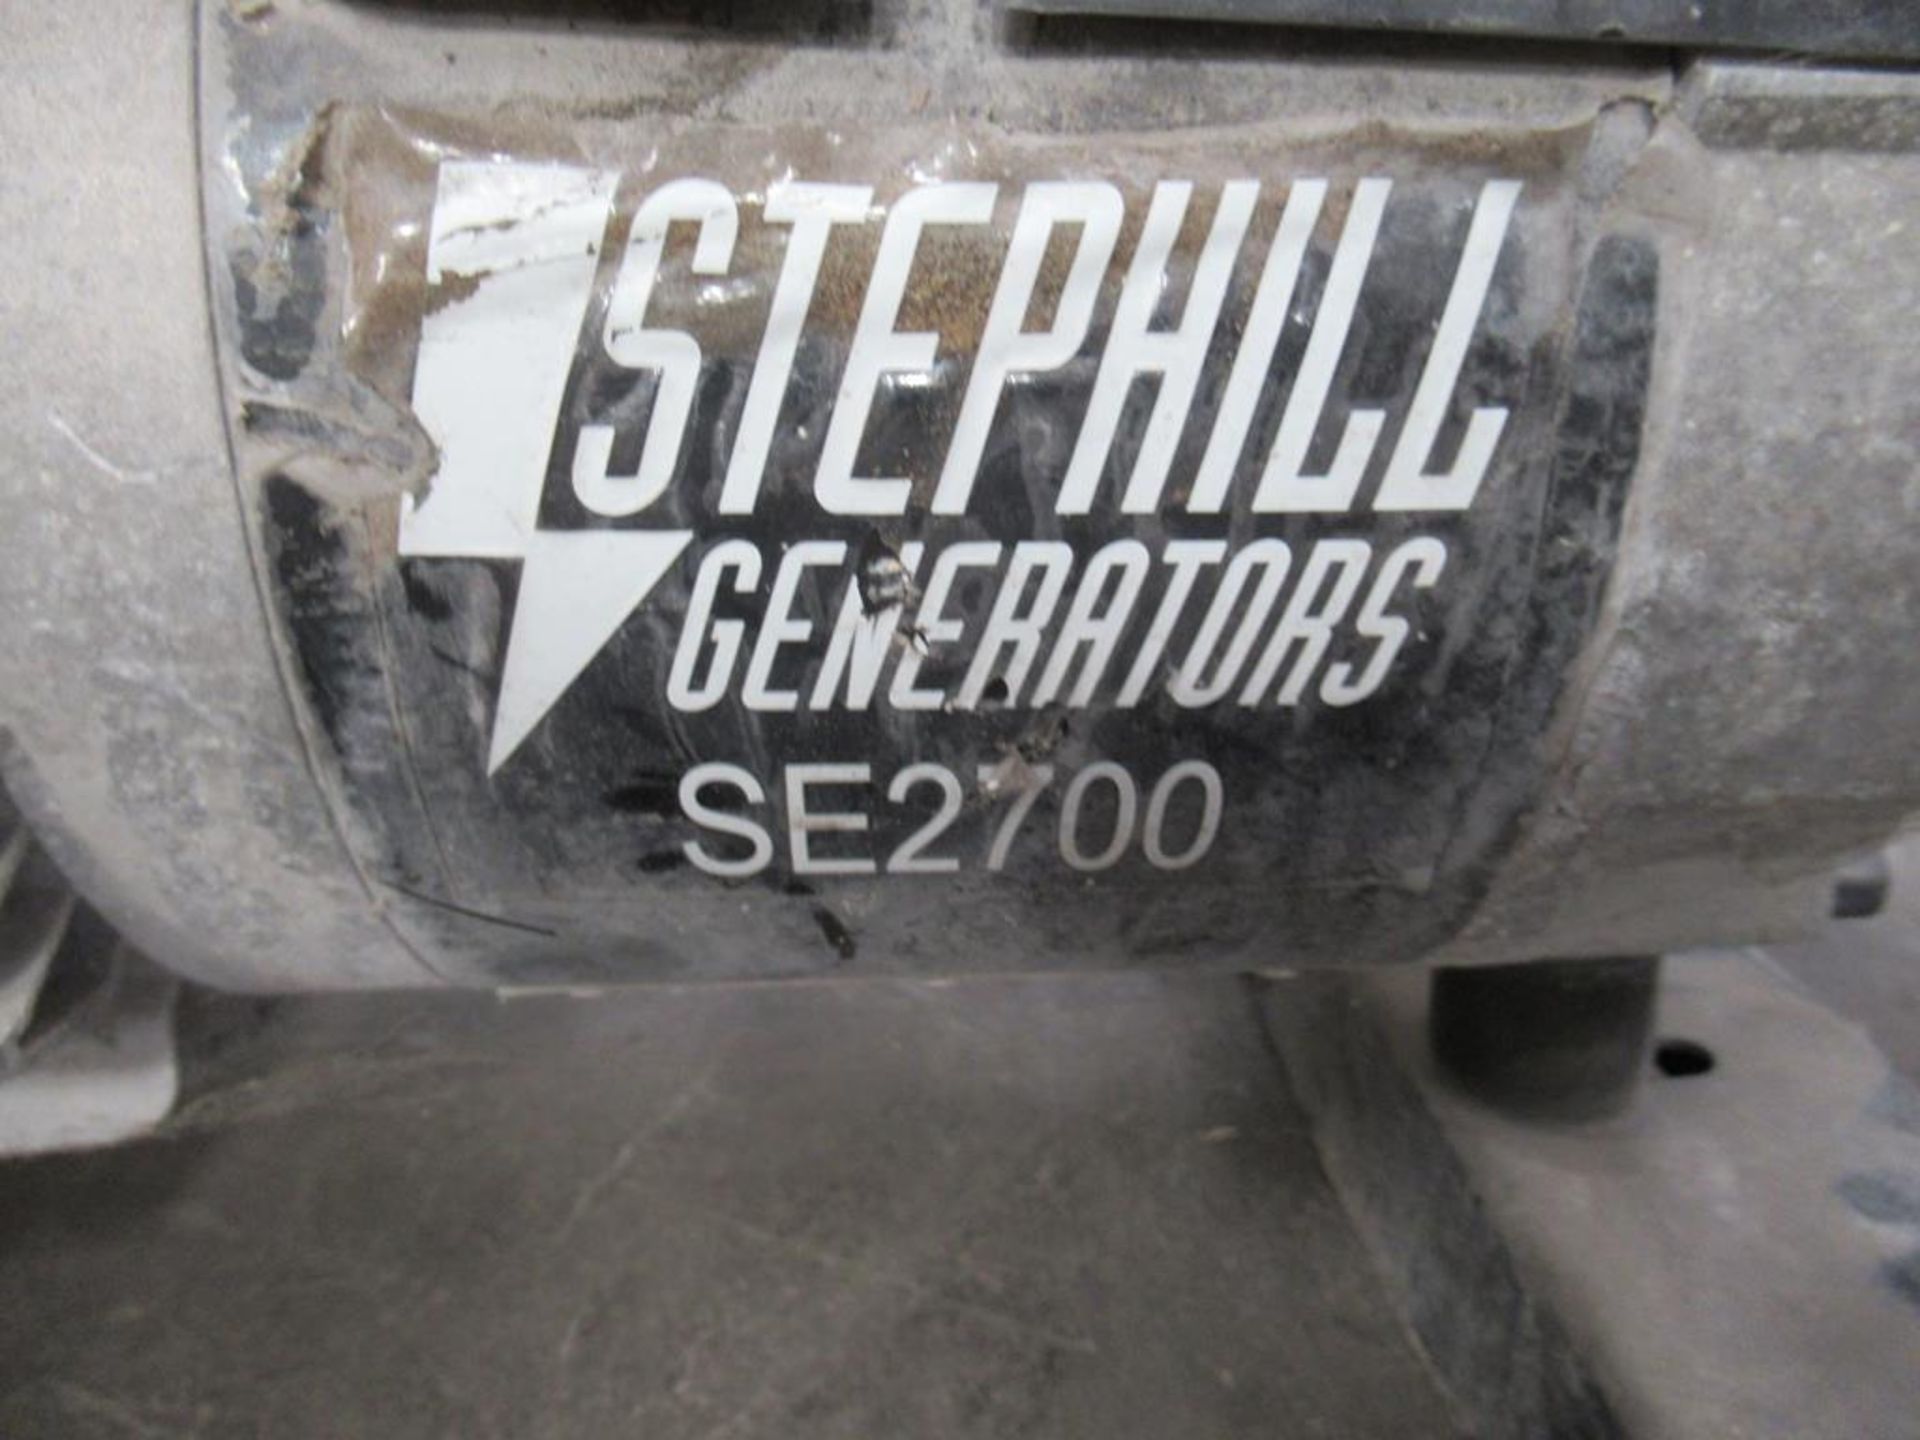 A Stephill 110V/240V Mobile Petrol Generator - Image 2 of 3